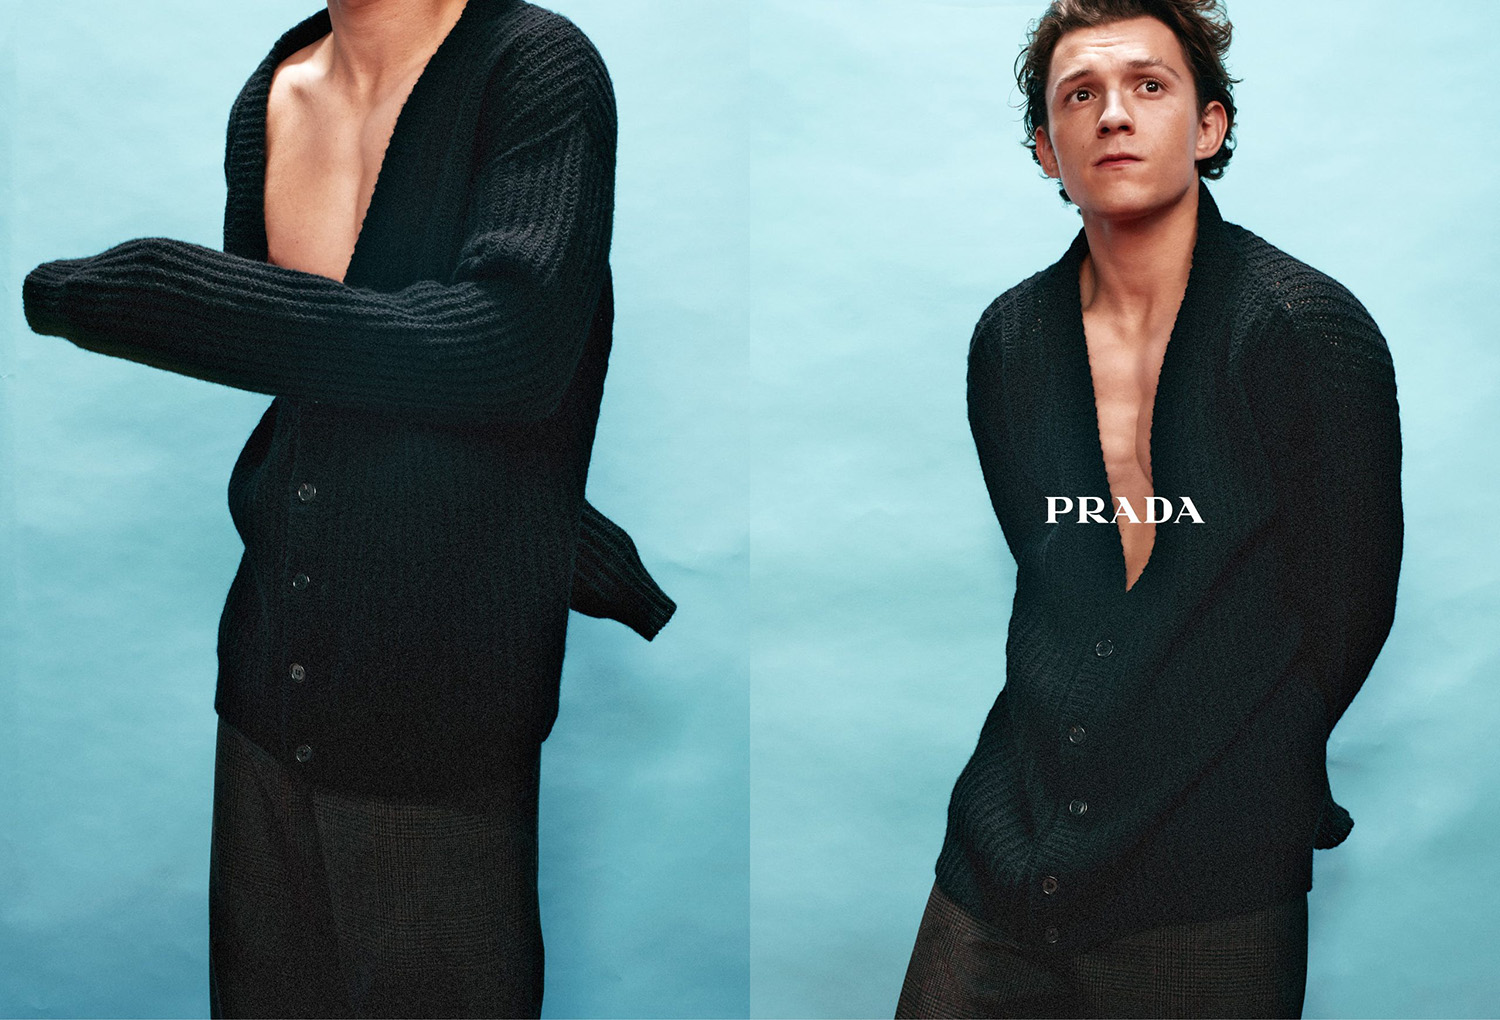 Prada Men’s Spring/Summer 2022 Campaign fashionotography